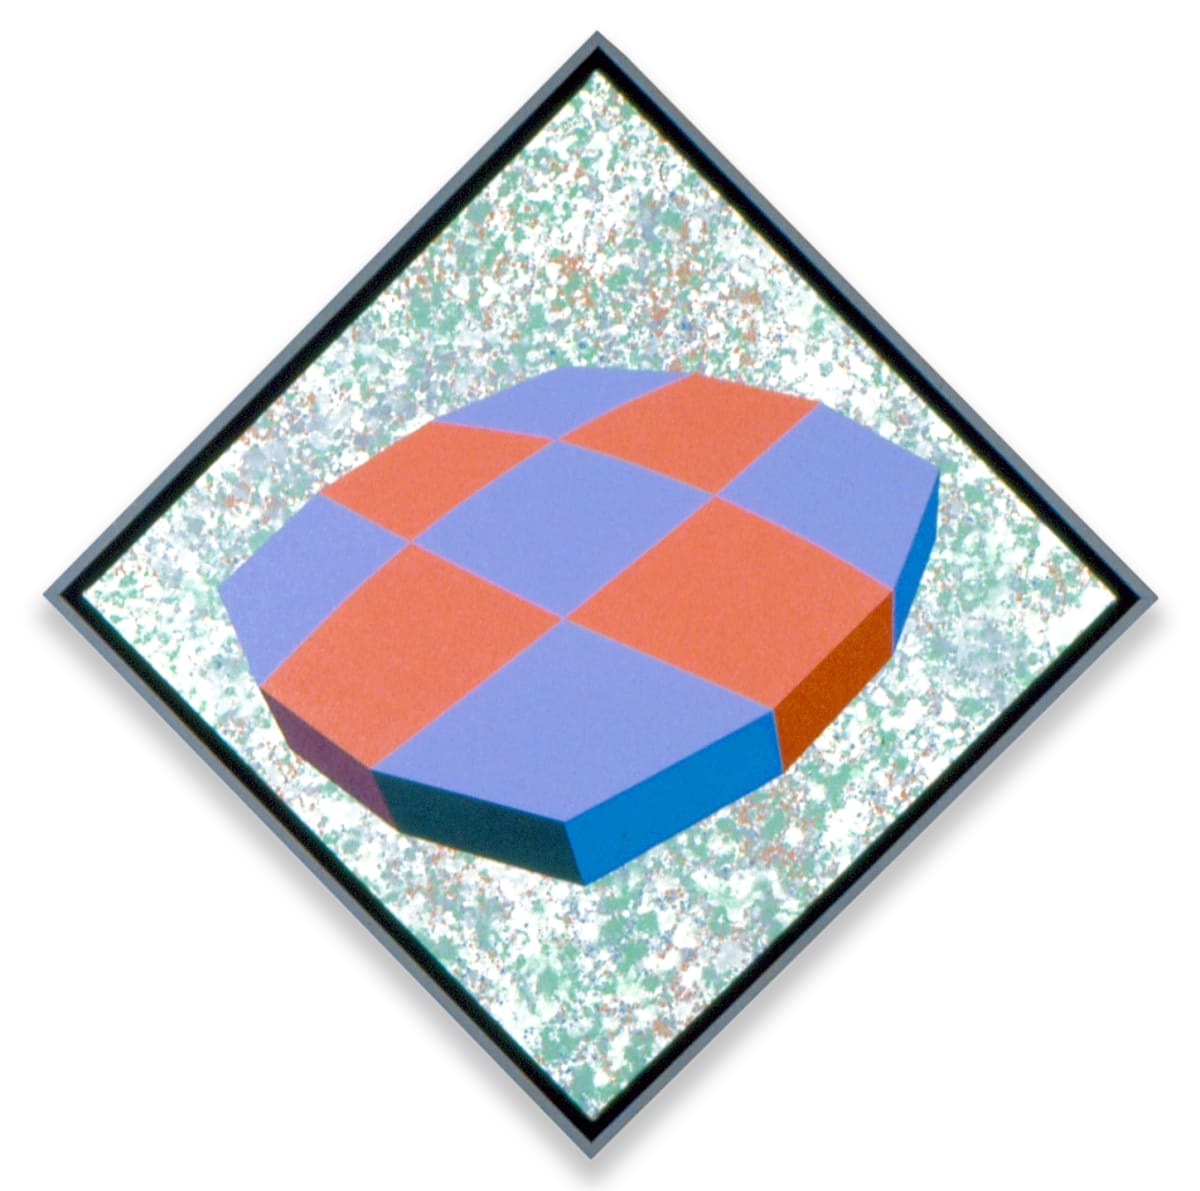 Convex Checkered Lens by Ronald Davis 